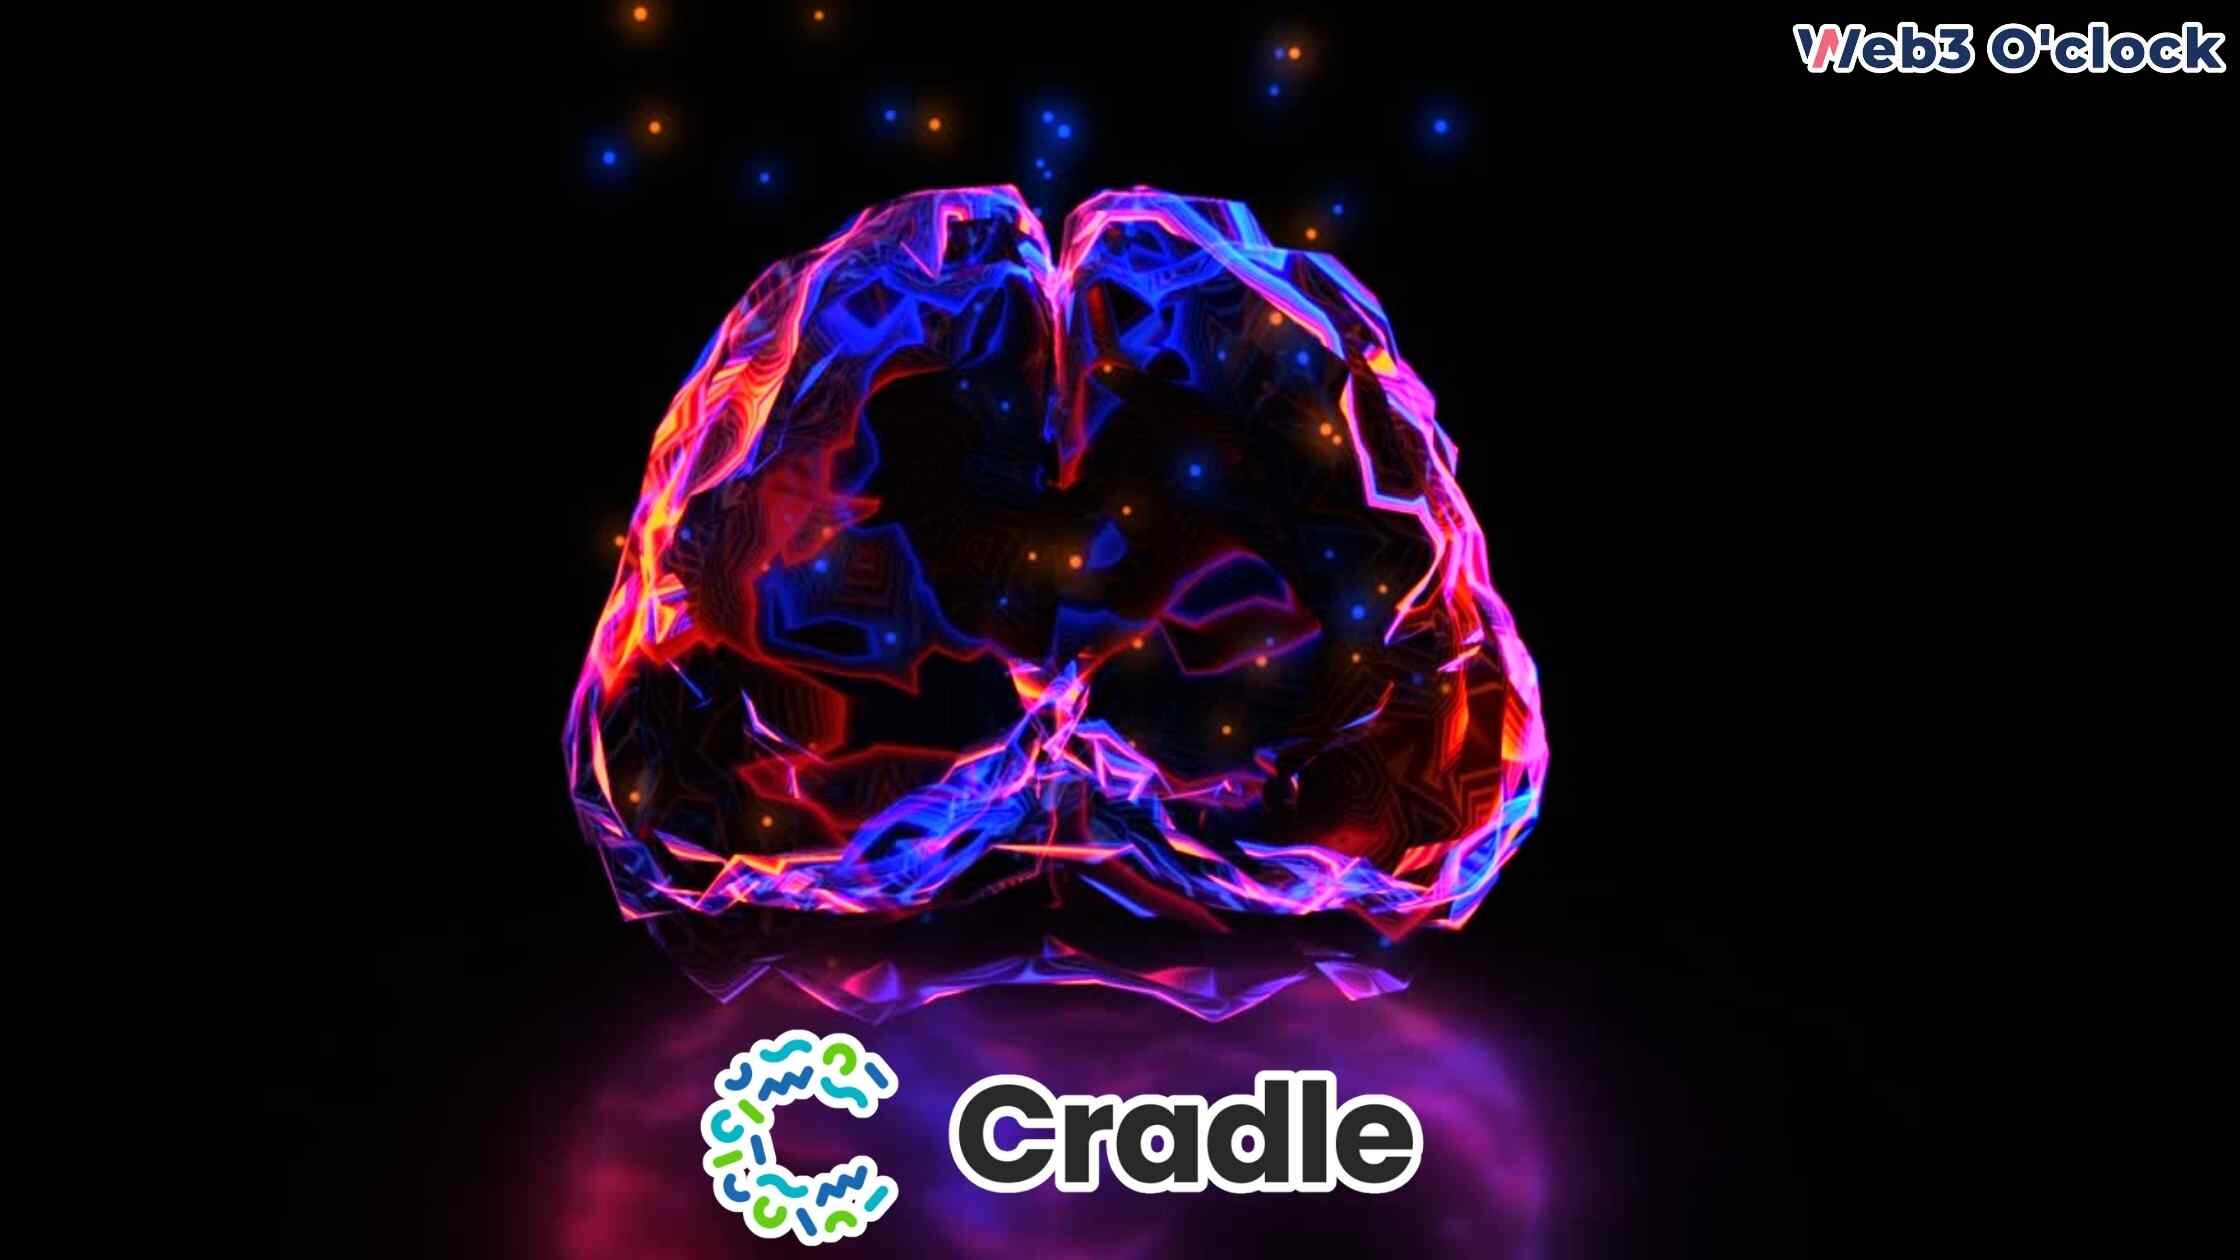 Cradle Raises $24 Million by Web3oclock